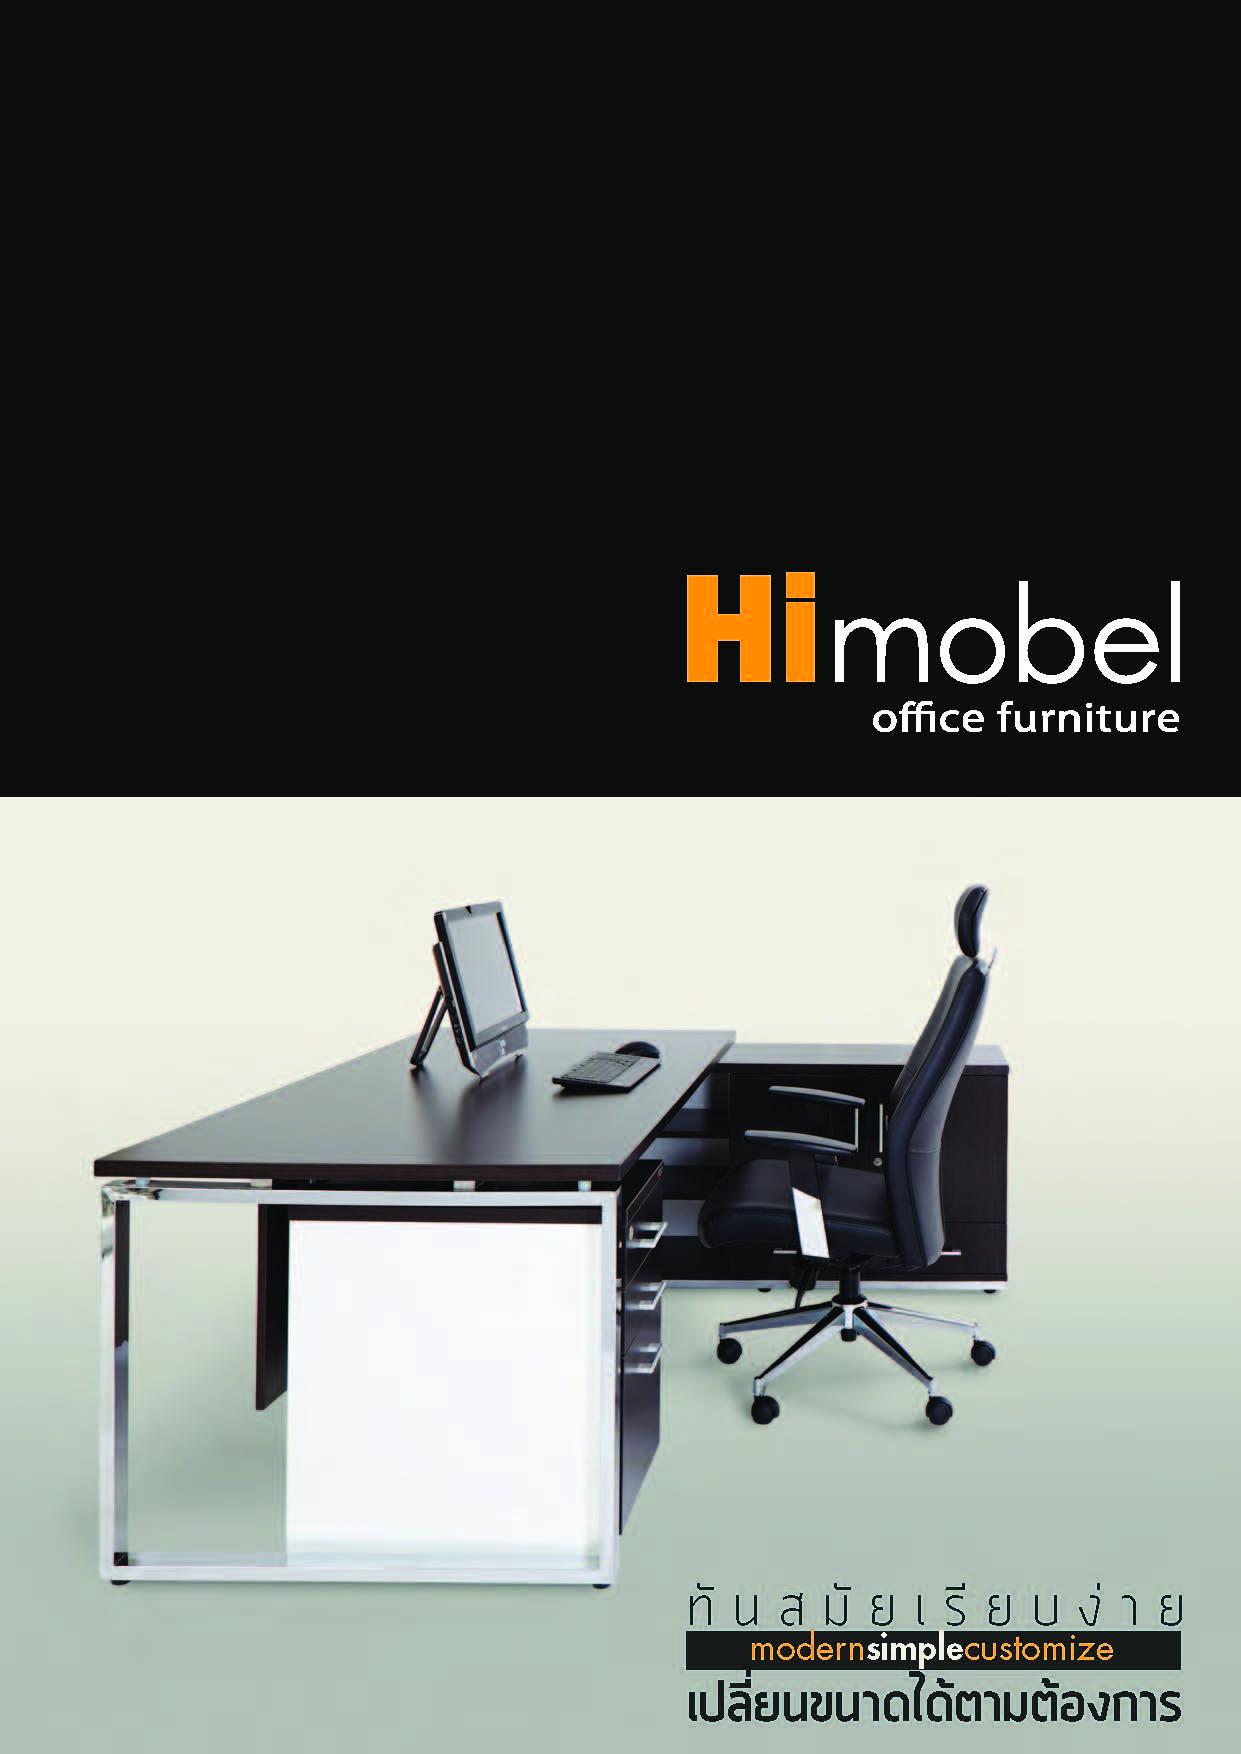 Himobel office